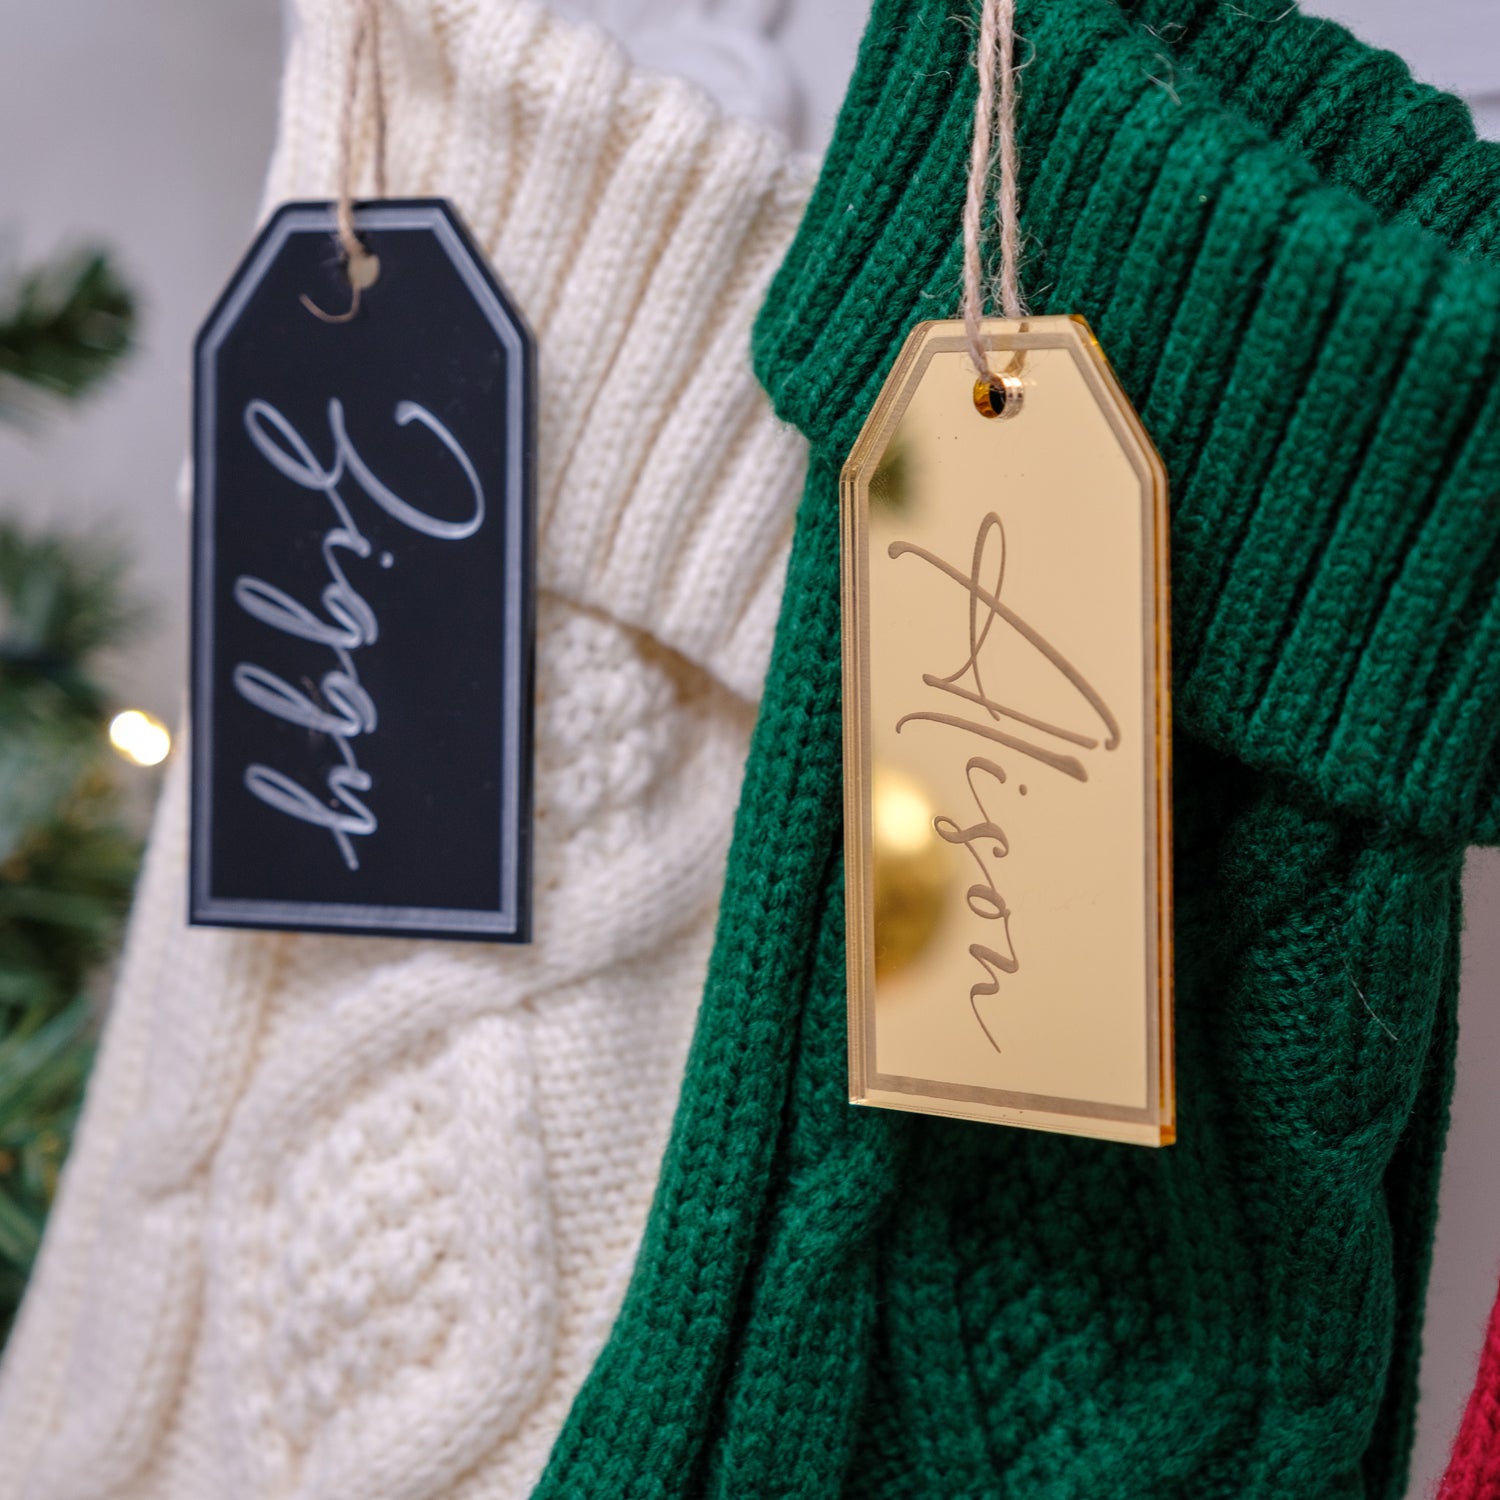 Christmas stockings with tags